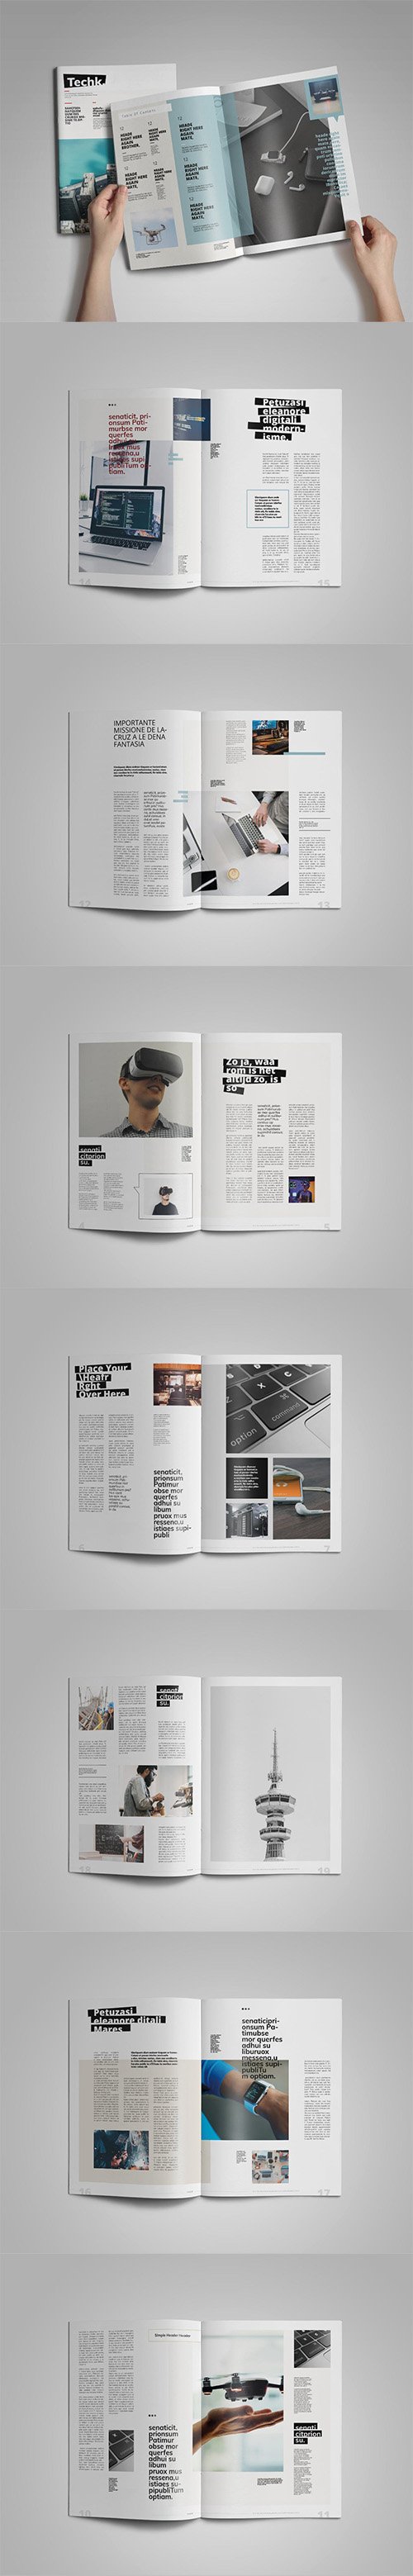 Techk | Magazine Template